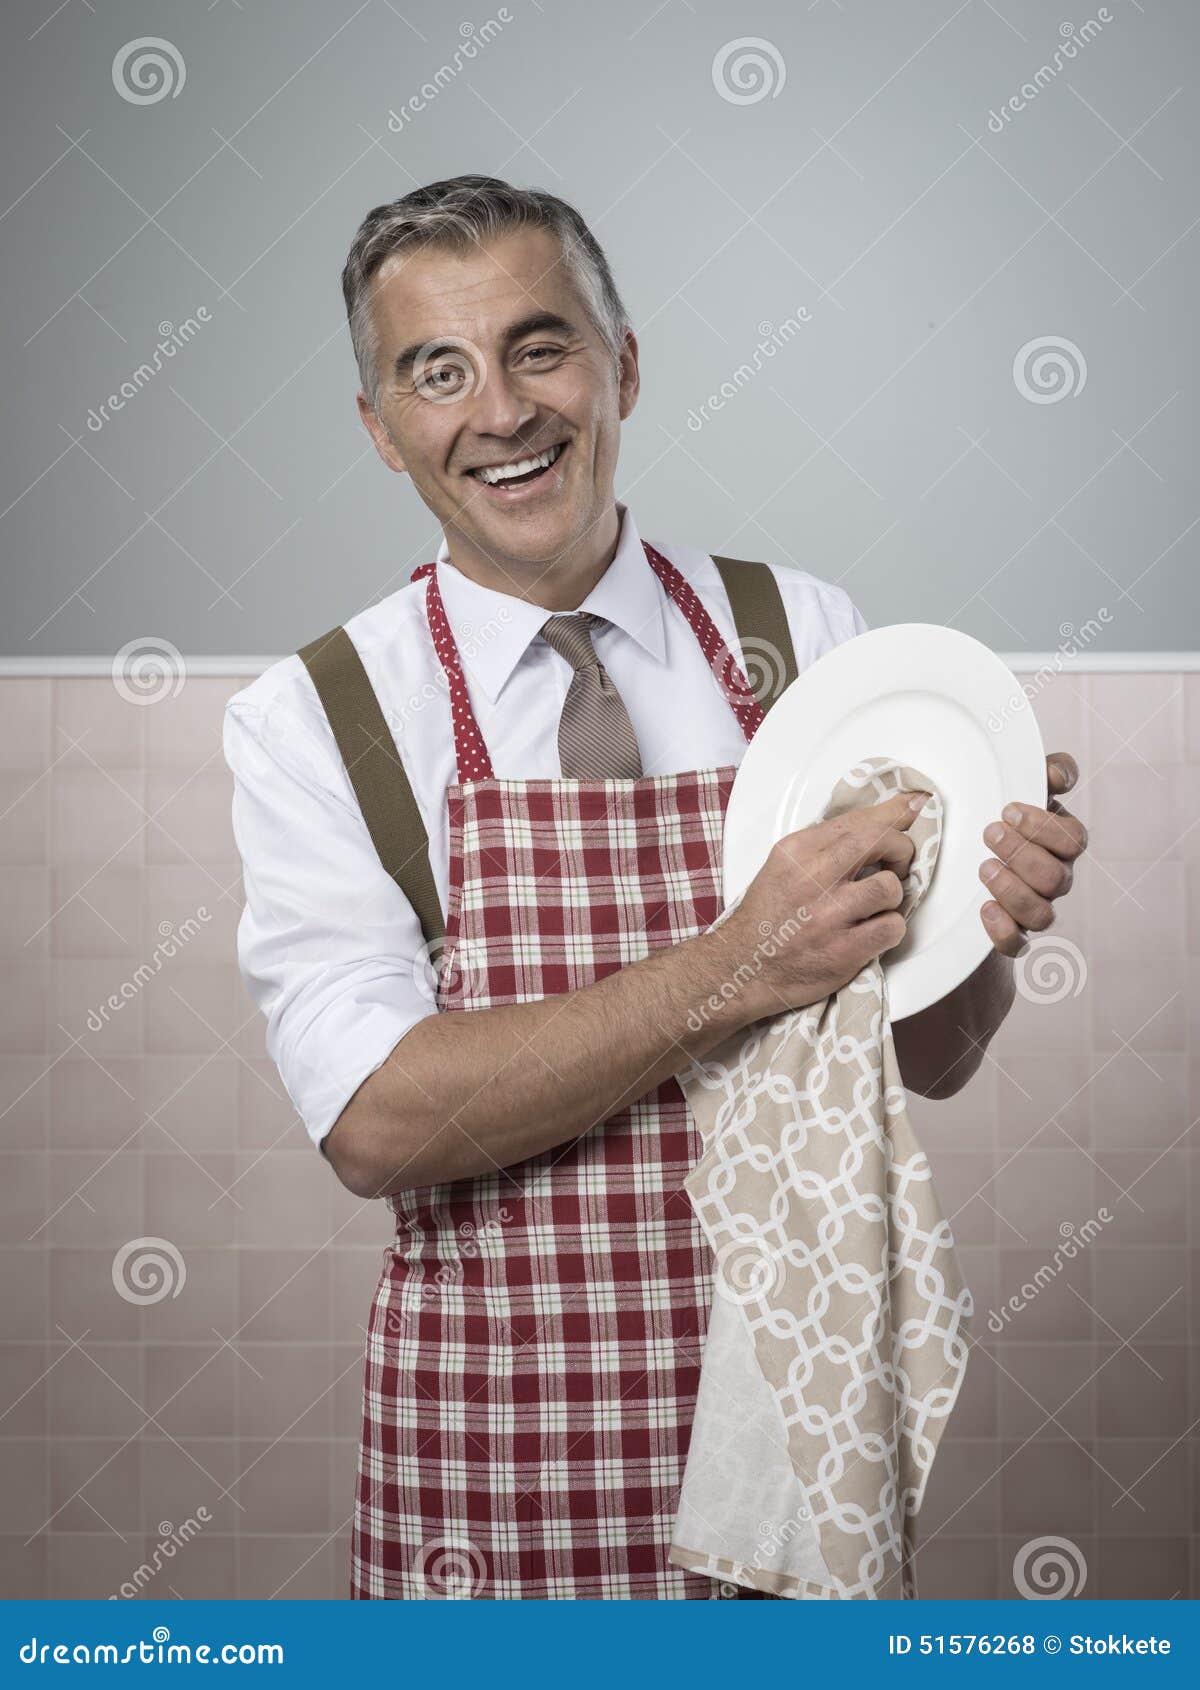 man doing household chores